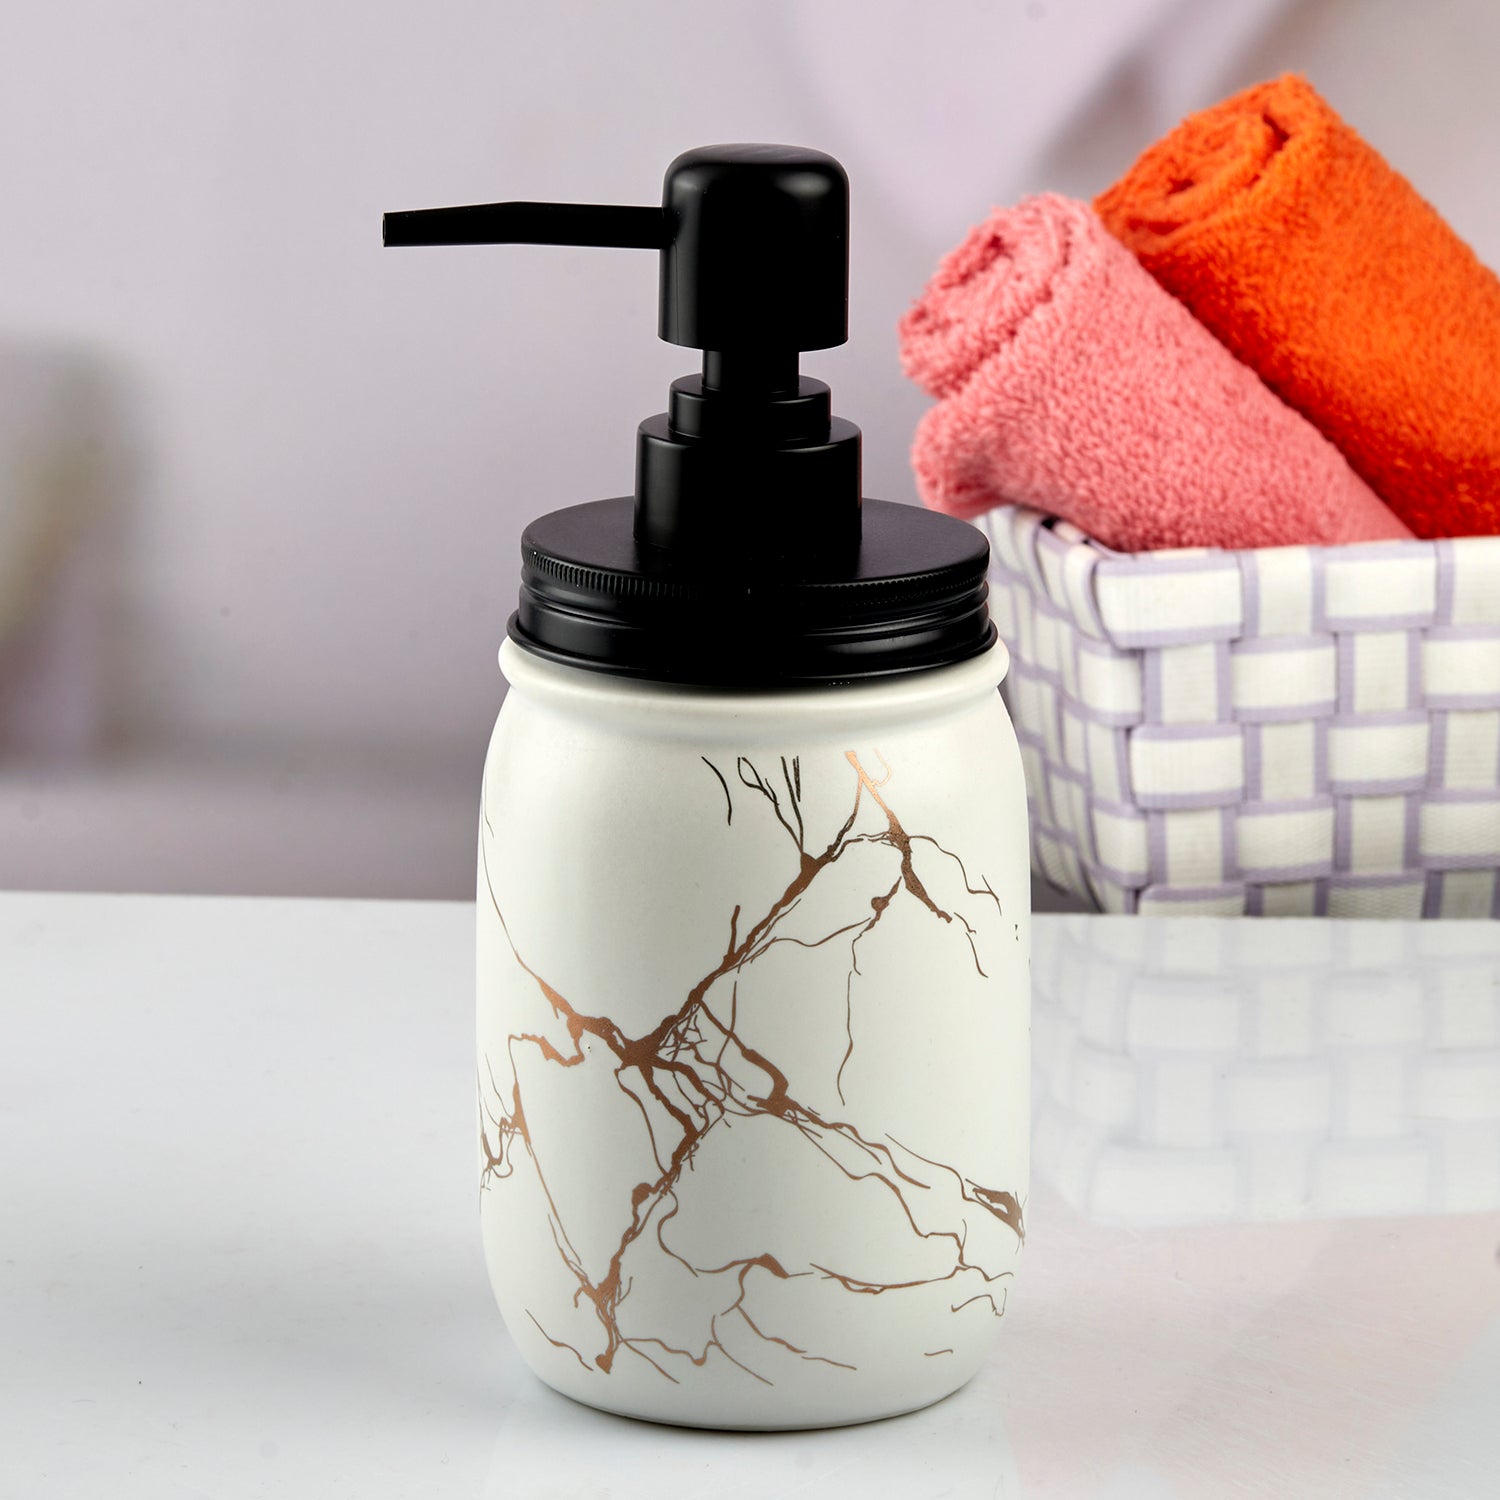 Ceramic Soap Dispenser handwash Pump for Bathroom, Set of 1, White (10736)